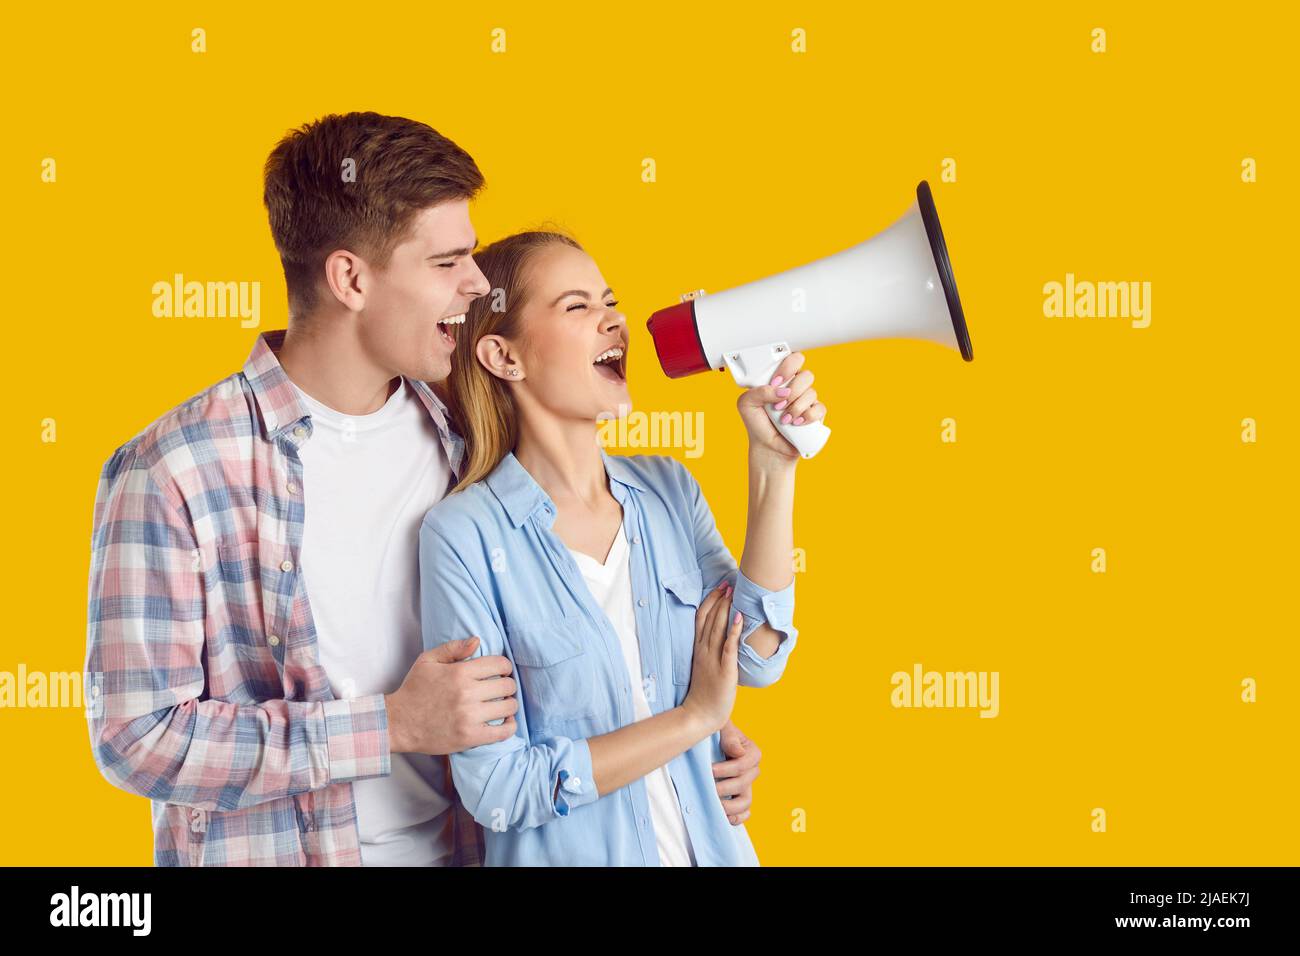 Funny joyful young couple with loudspeaker making loud advertisement on orange background. Stock Photo